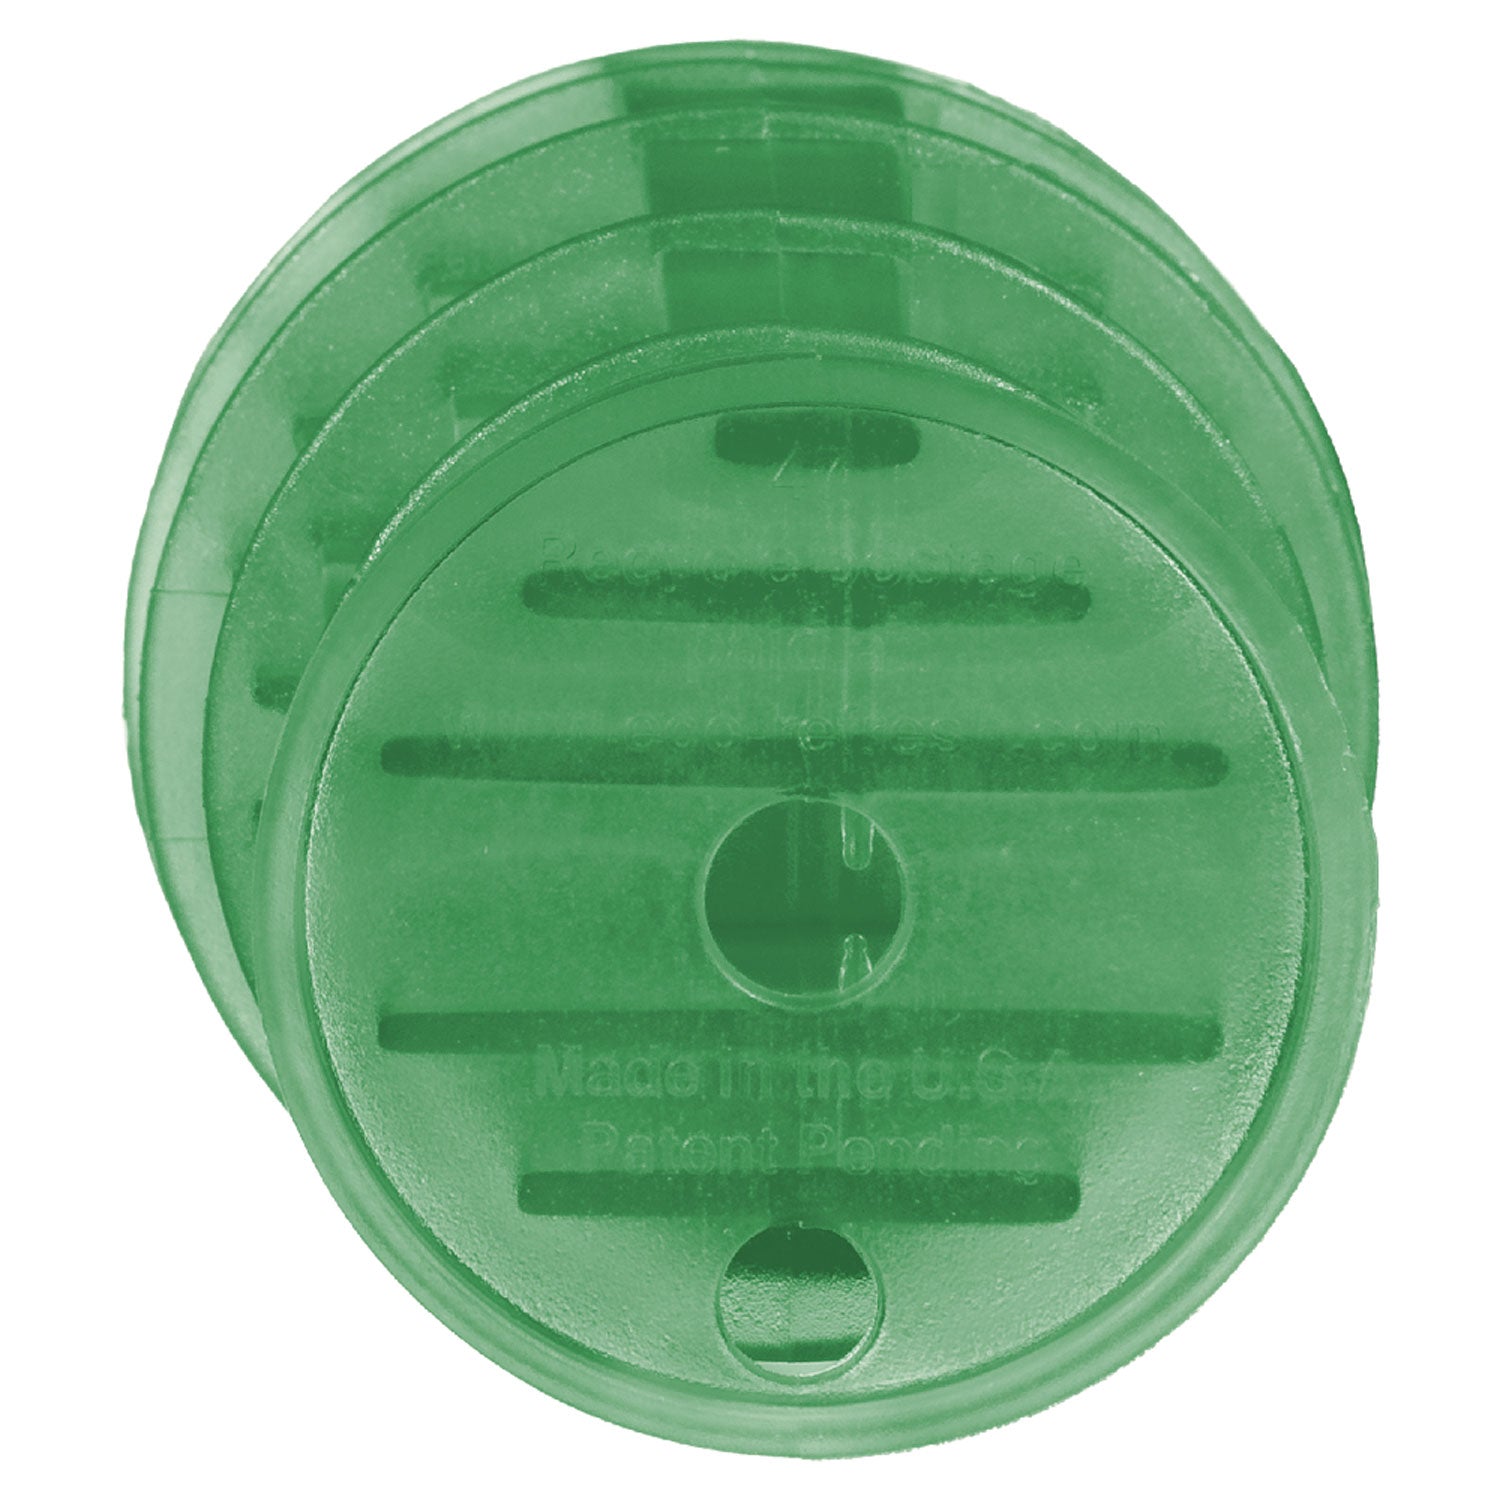 Eco Air 30-Day Air Freshener Refill, Cucumber Melon, 2.89 oz Solid, 6/Box - 3